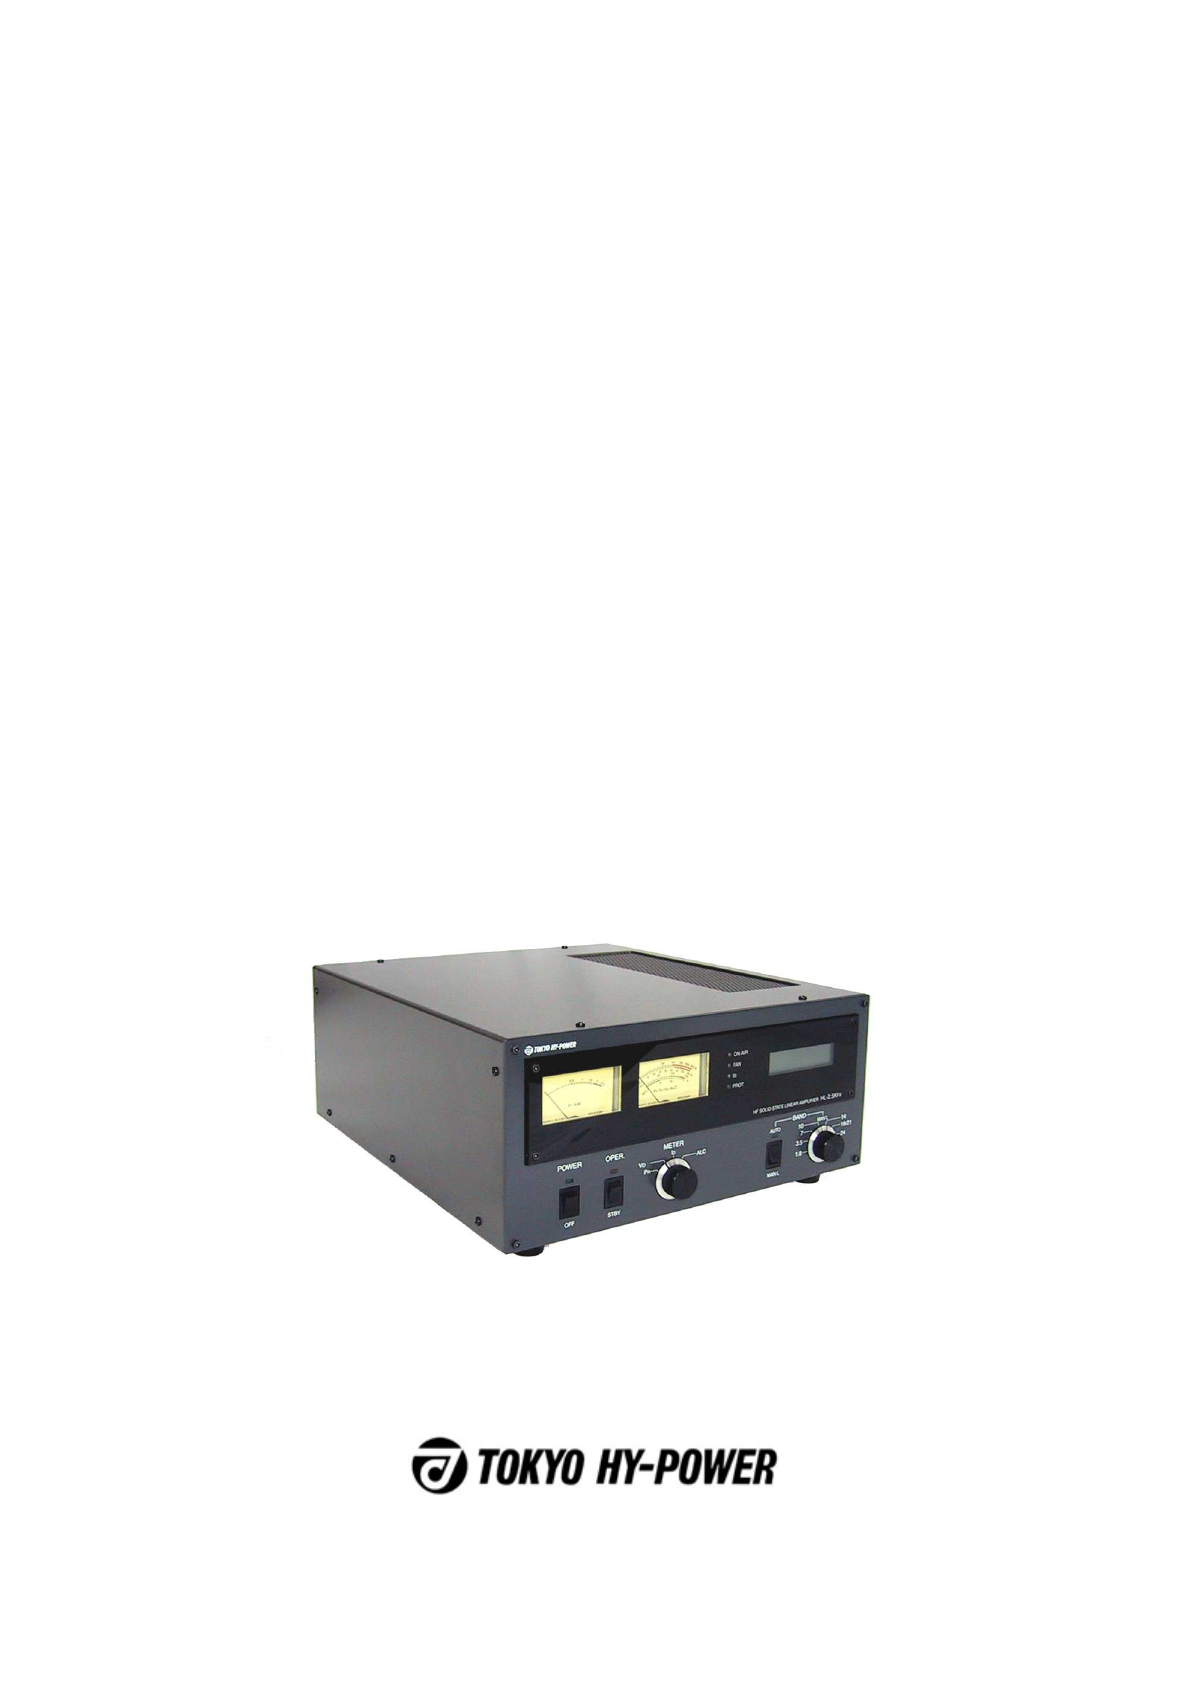 Tokyo Hy Power Labs Hl 25kfx High Power Amplifier User Manual Users Manual